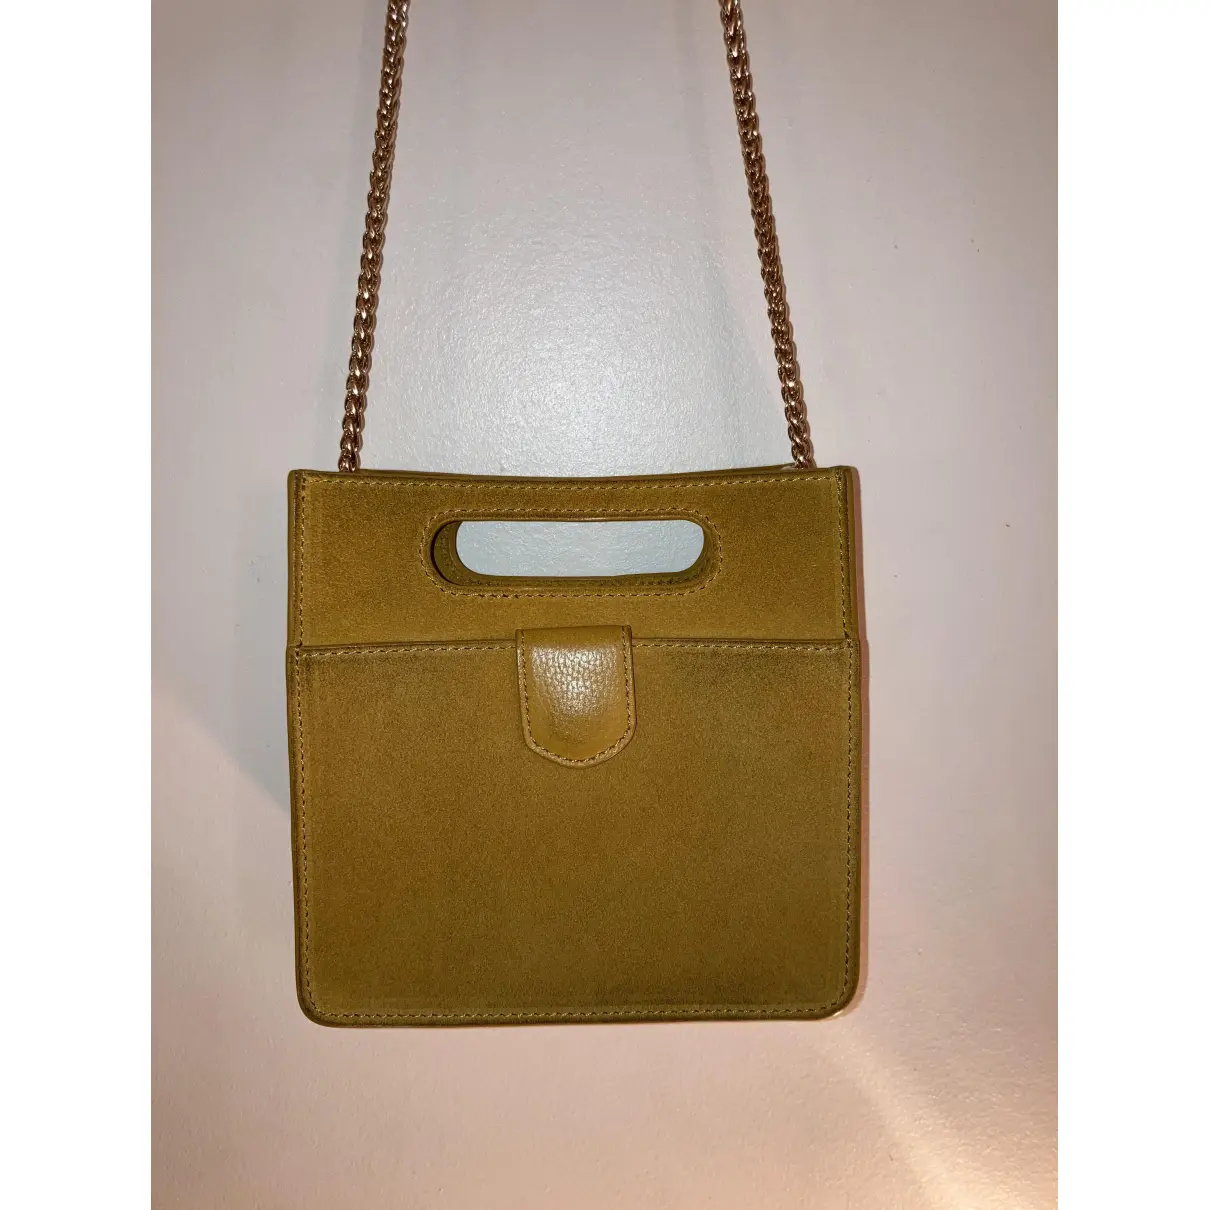 Buy Petite Mendigote Leather crossbody bag online